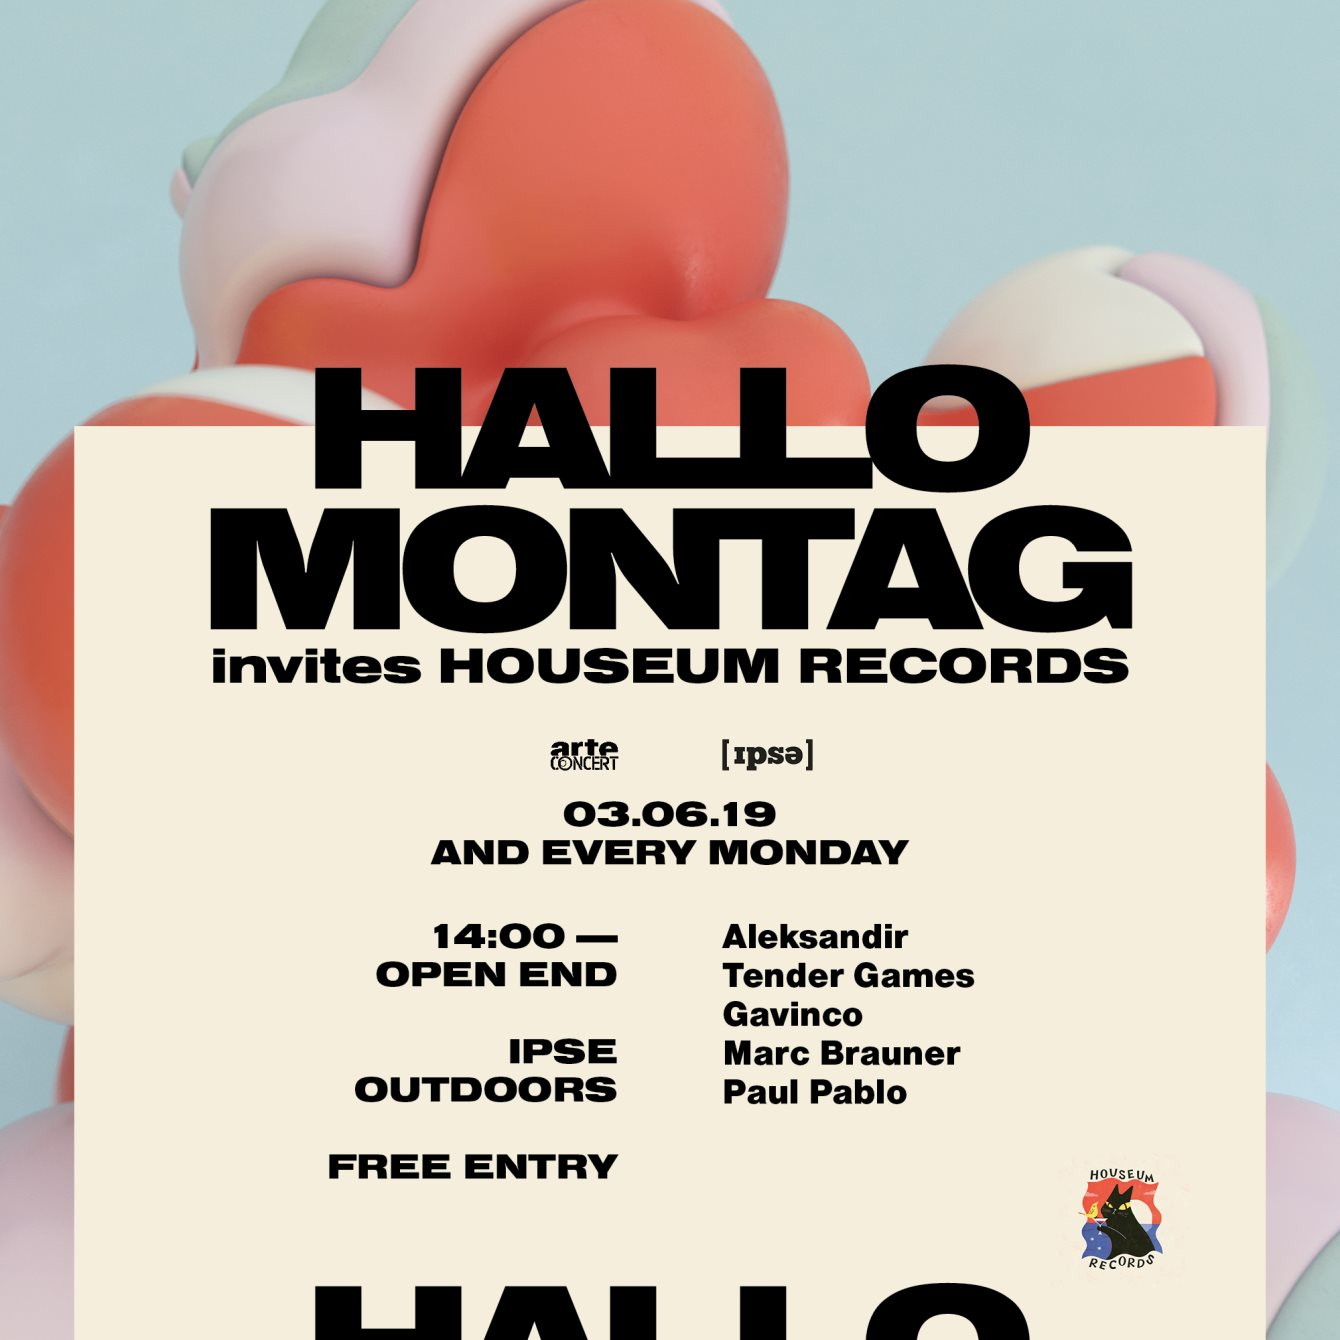 Hallo Montag Invites Houseum Records - Flyer front